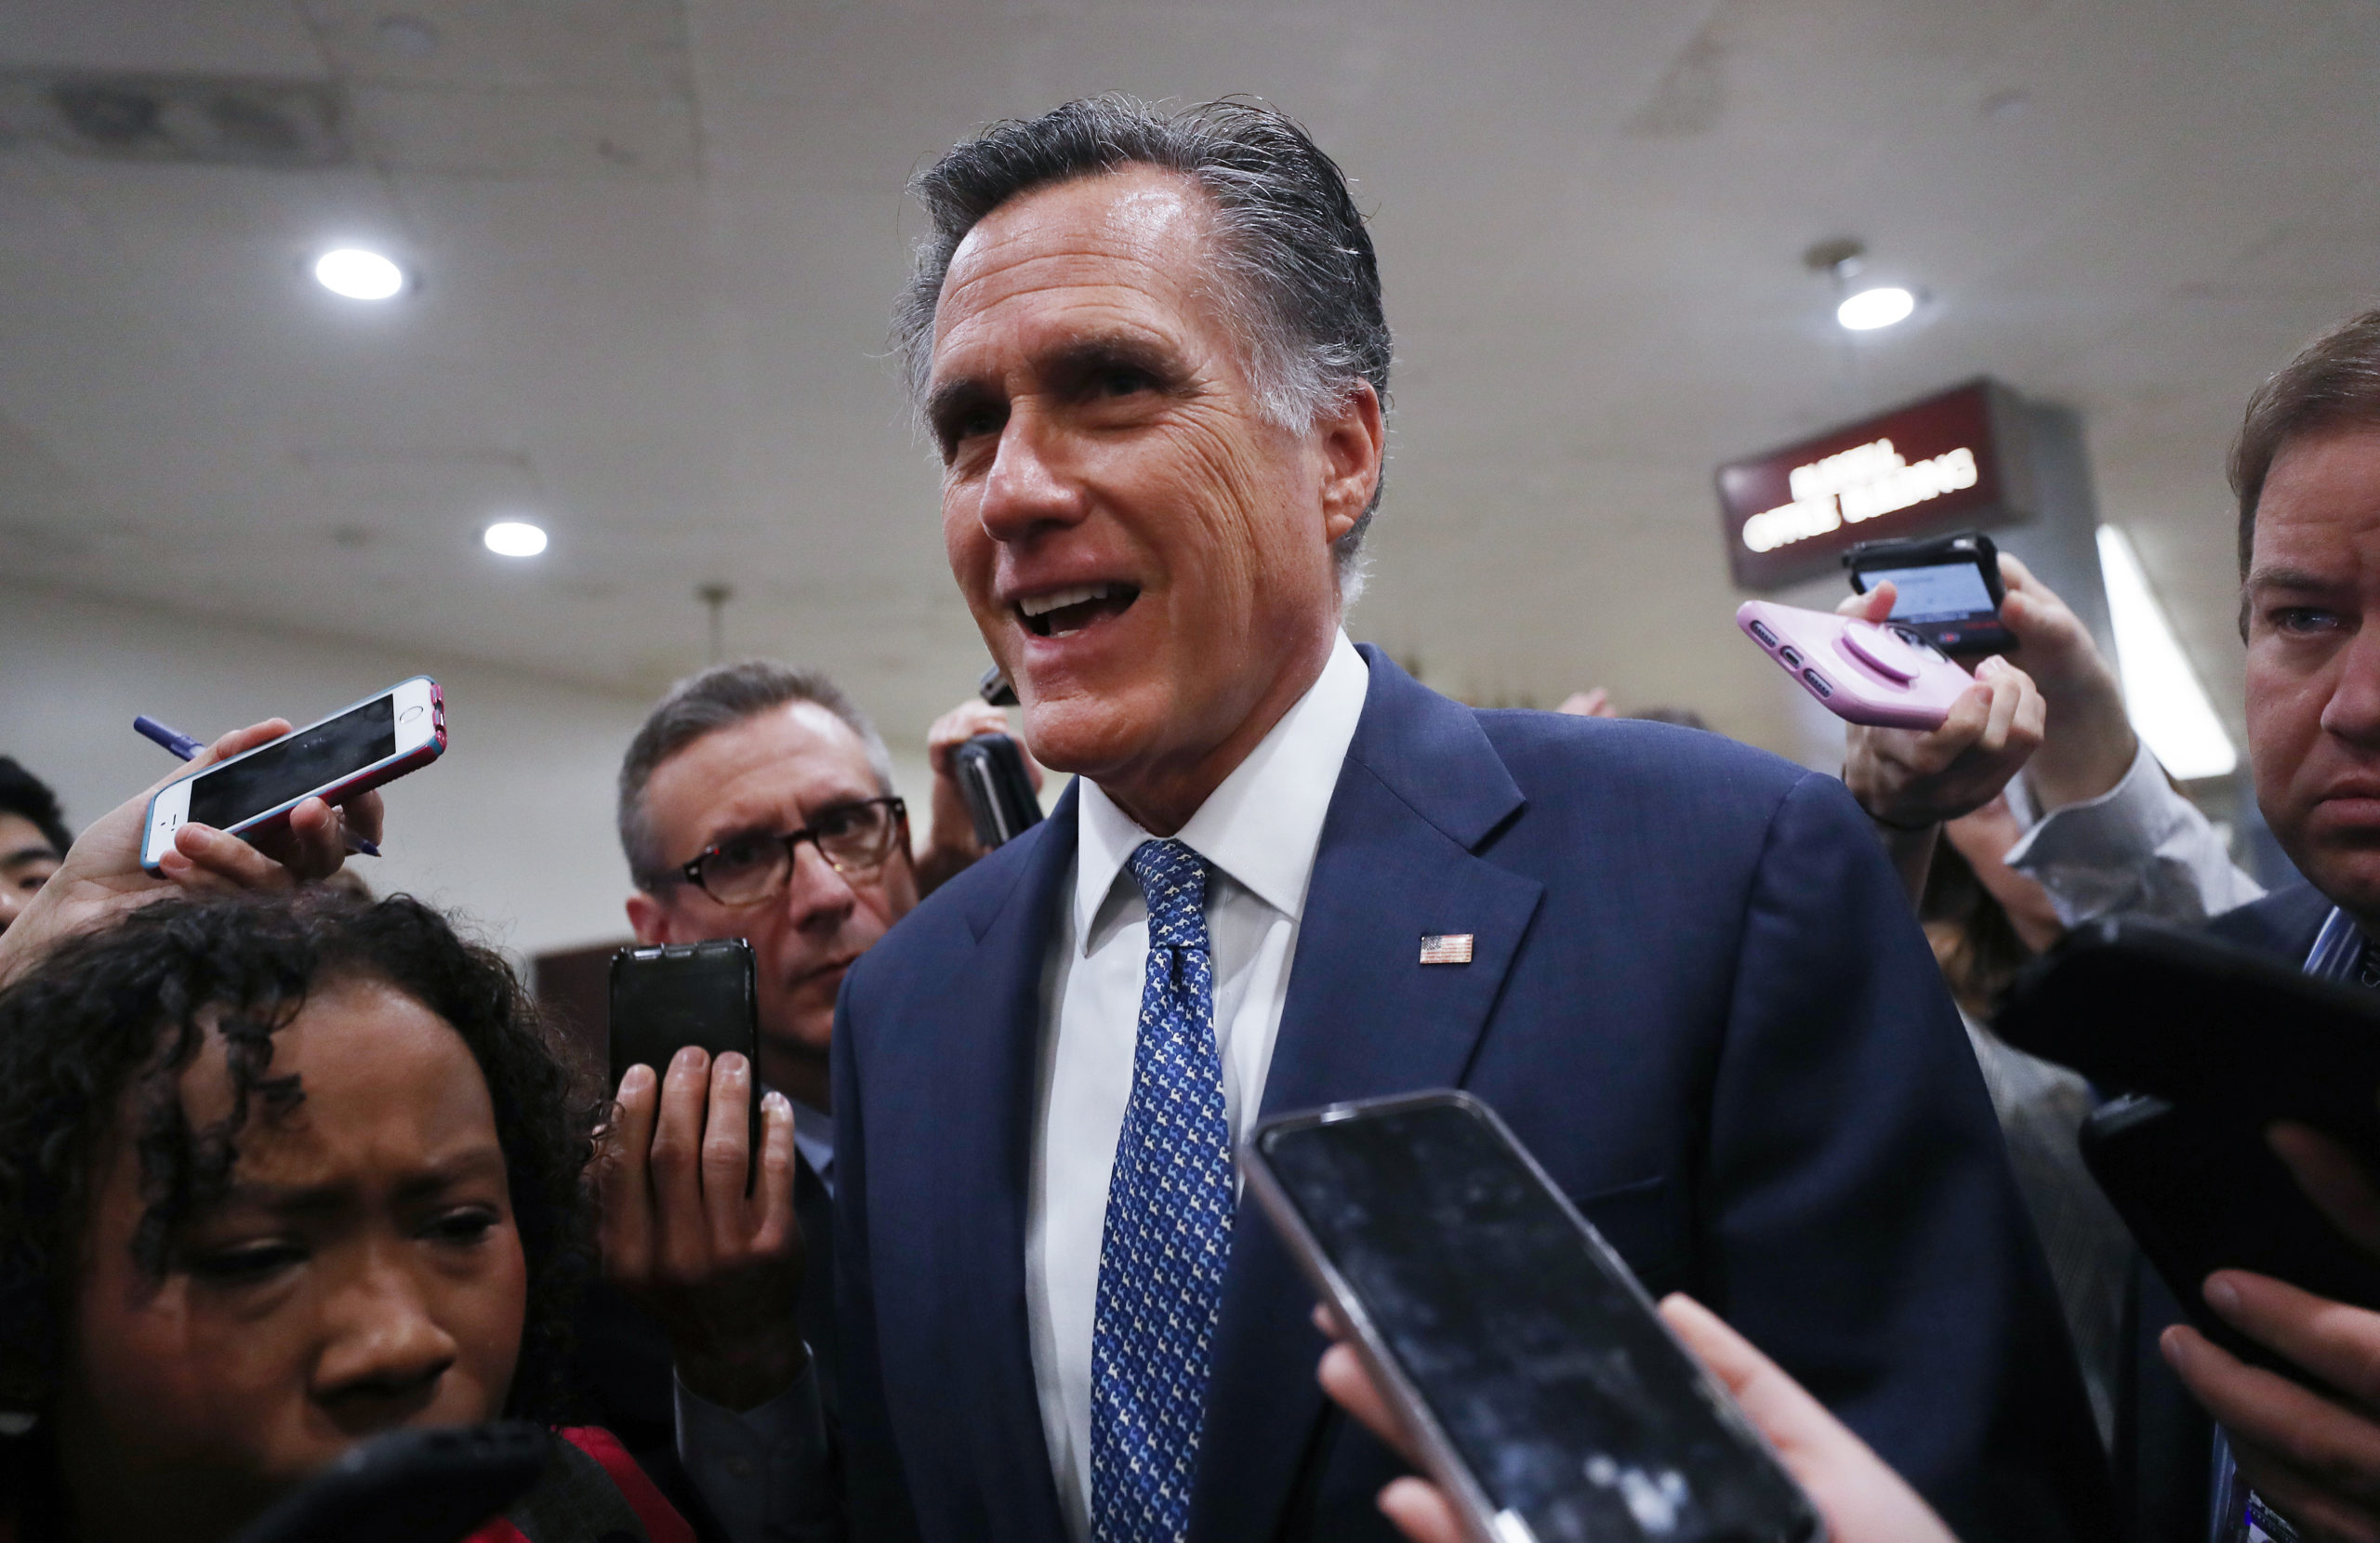 Sen Mitt Romney Blasted As A Hypocrite Following His Response To Trump